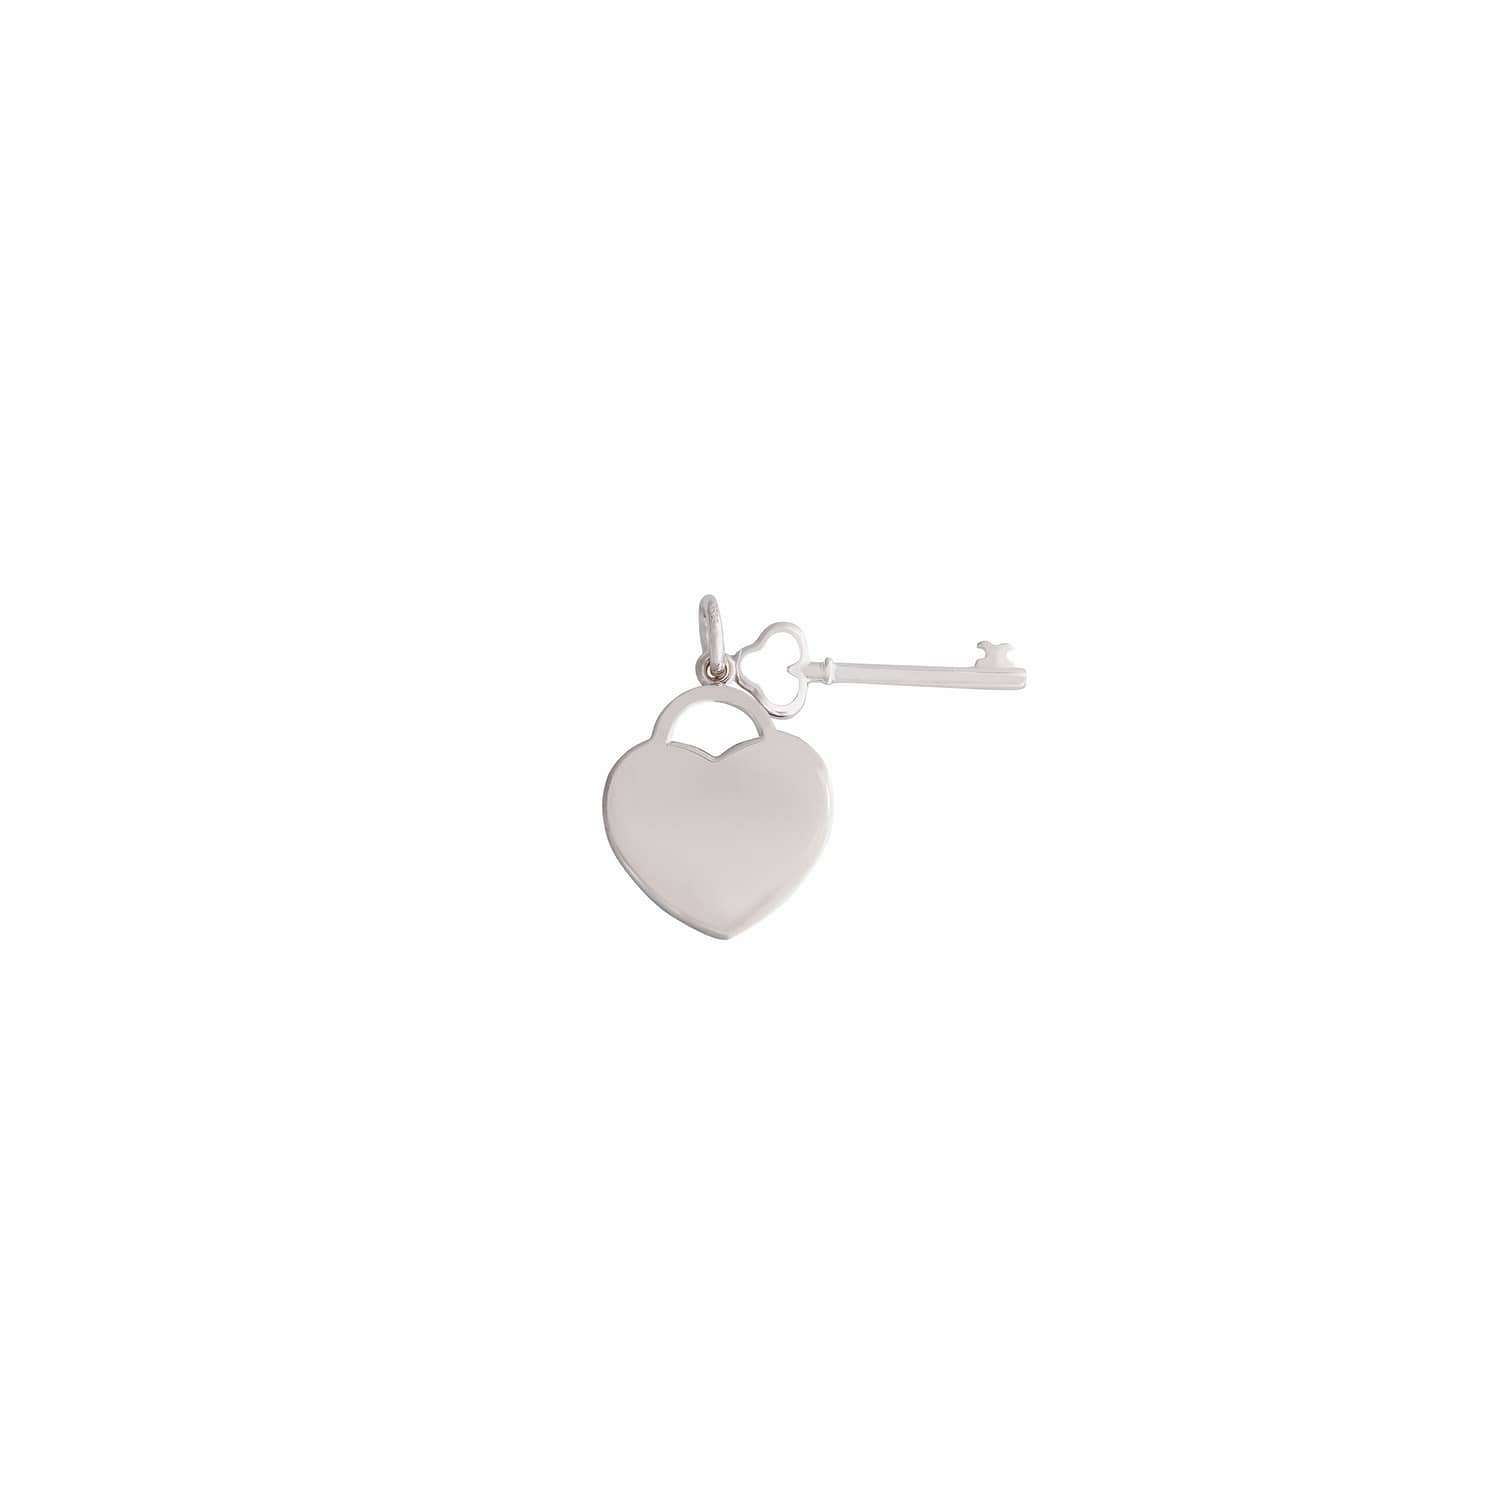 heart lock and key pendant